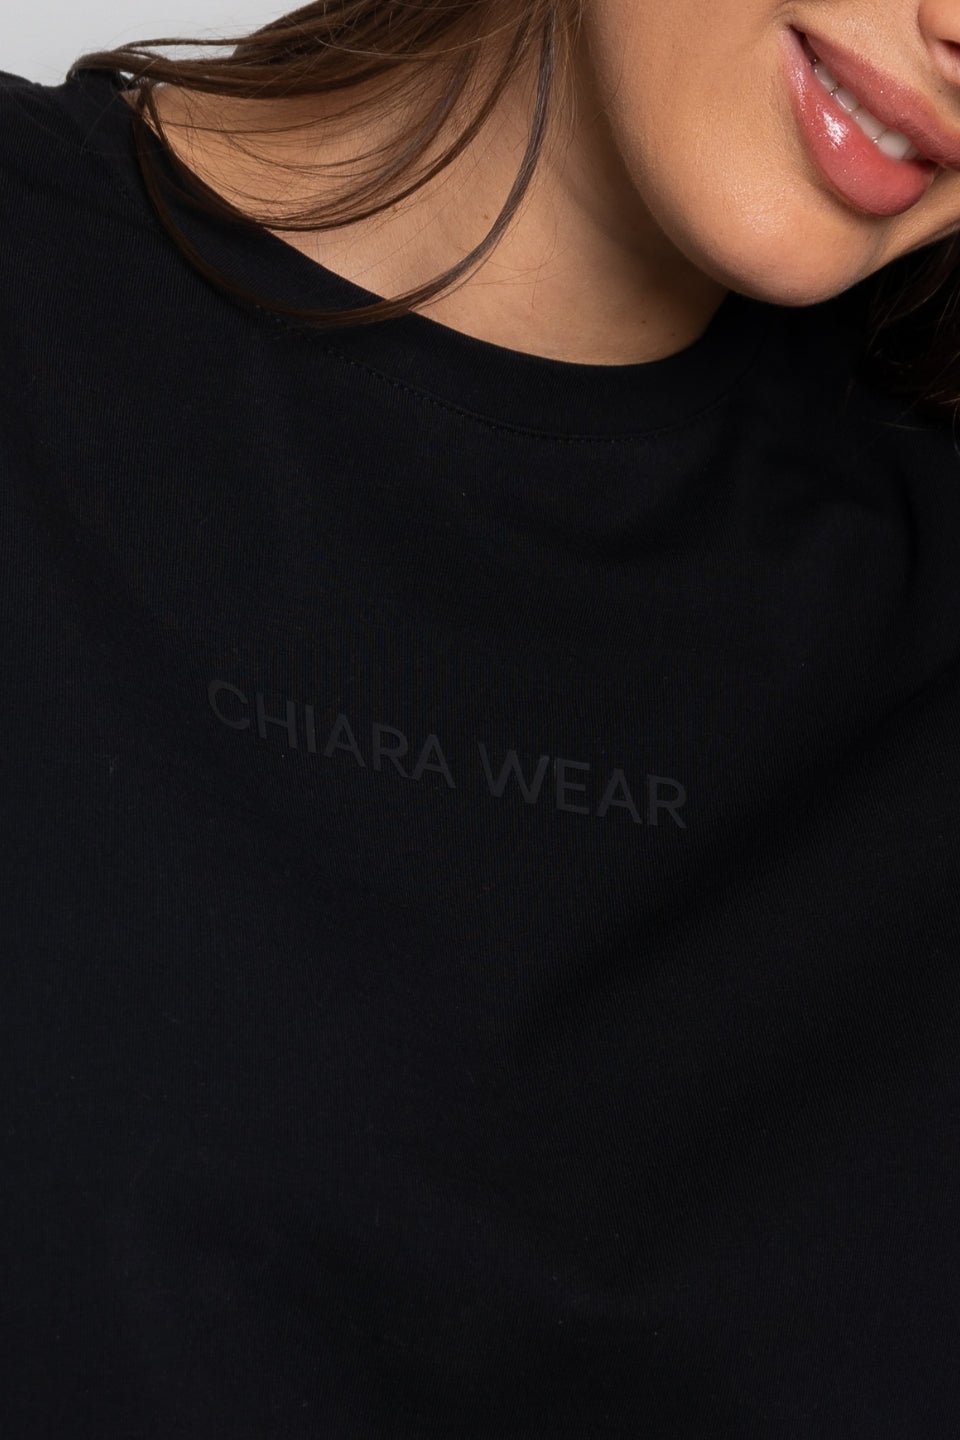 T-shirt krótki CROP TOP - czarny - Chiara Wear